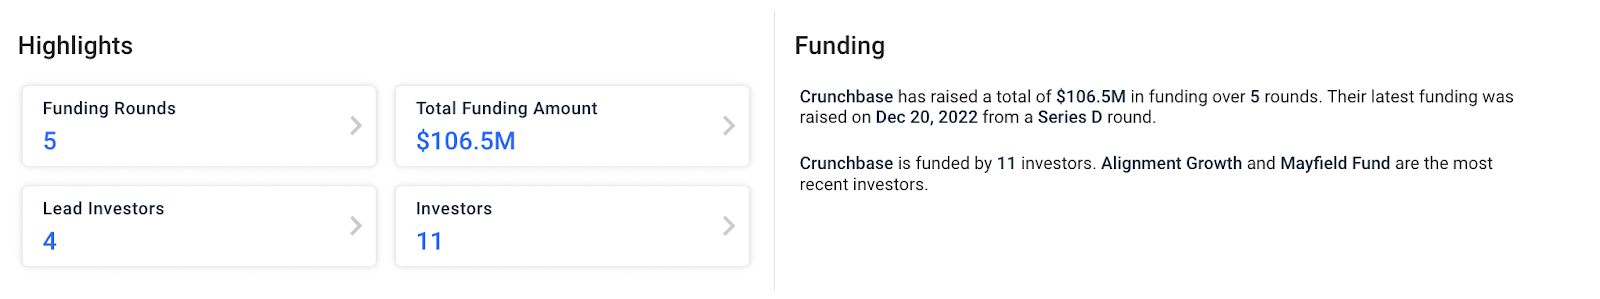 Base - Crunchbase Company Profile & Funding